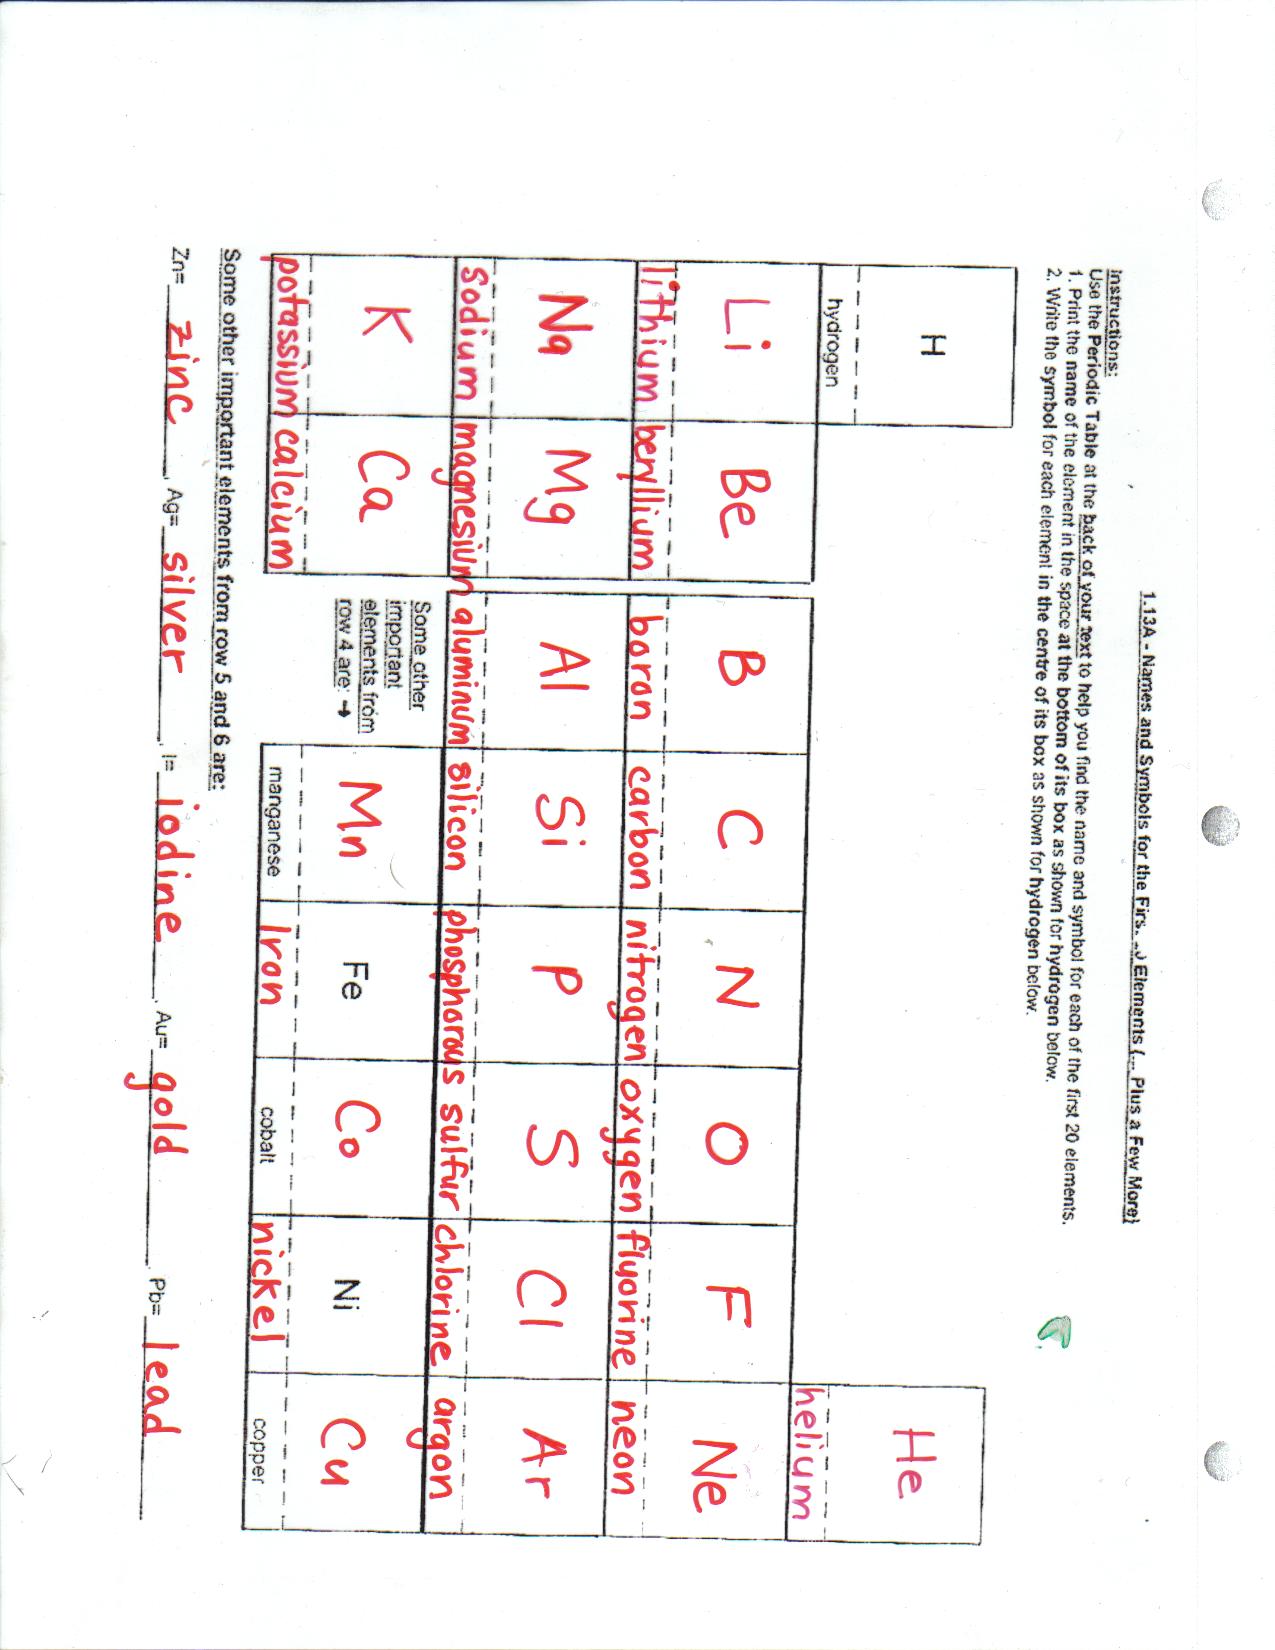 elements and symbols worksheet answers